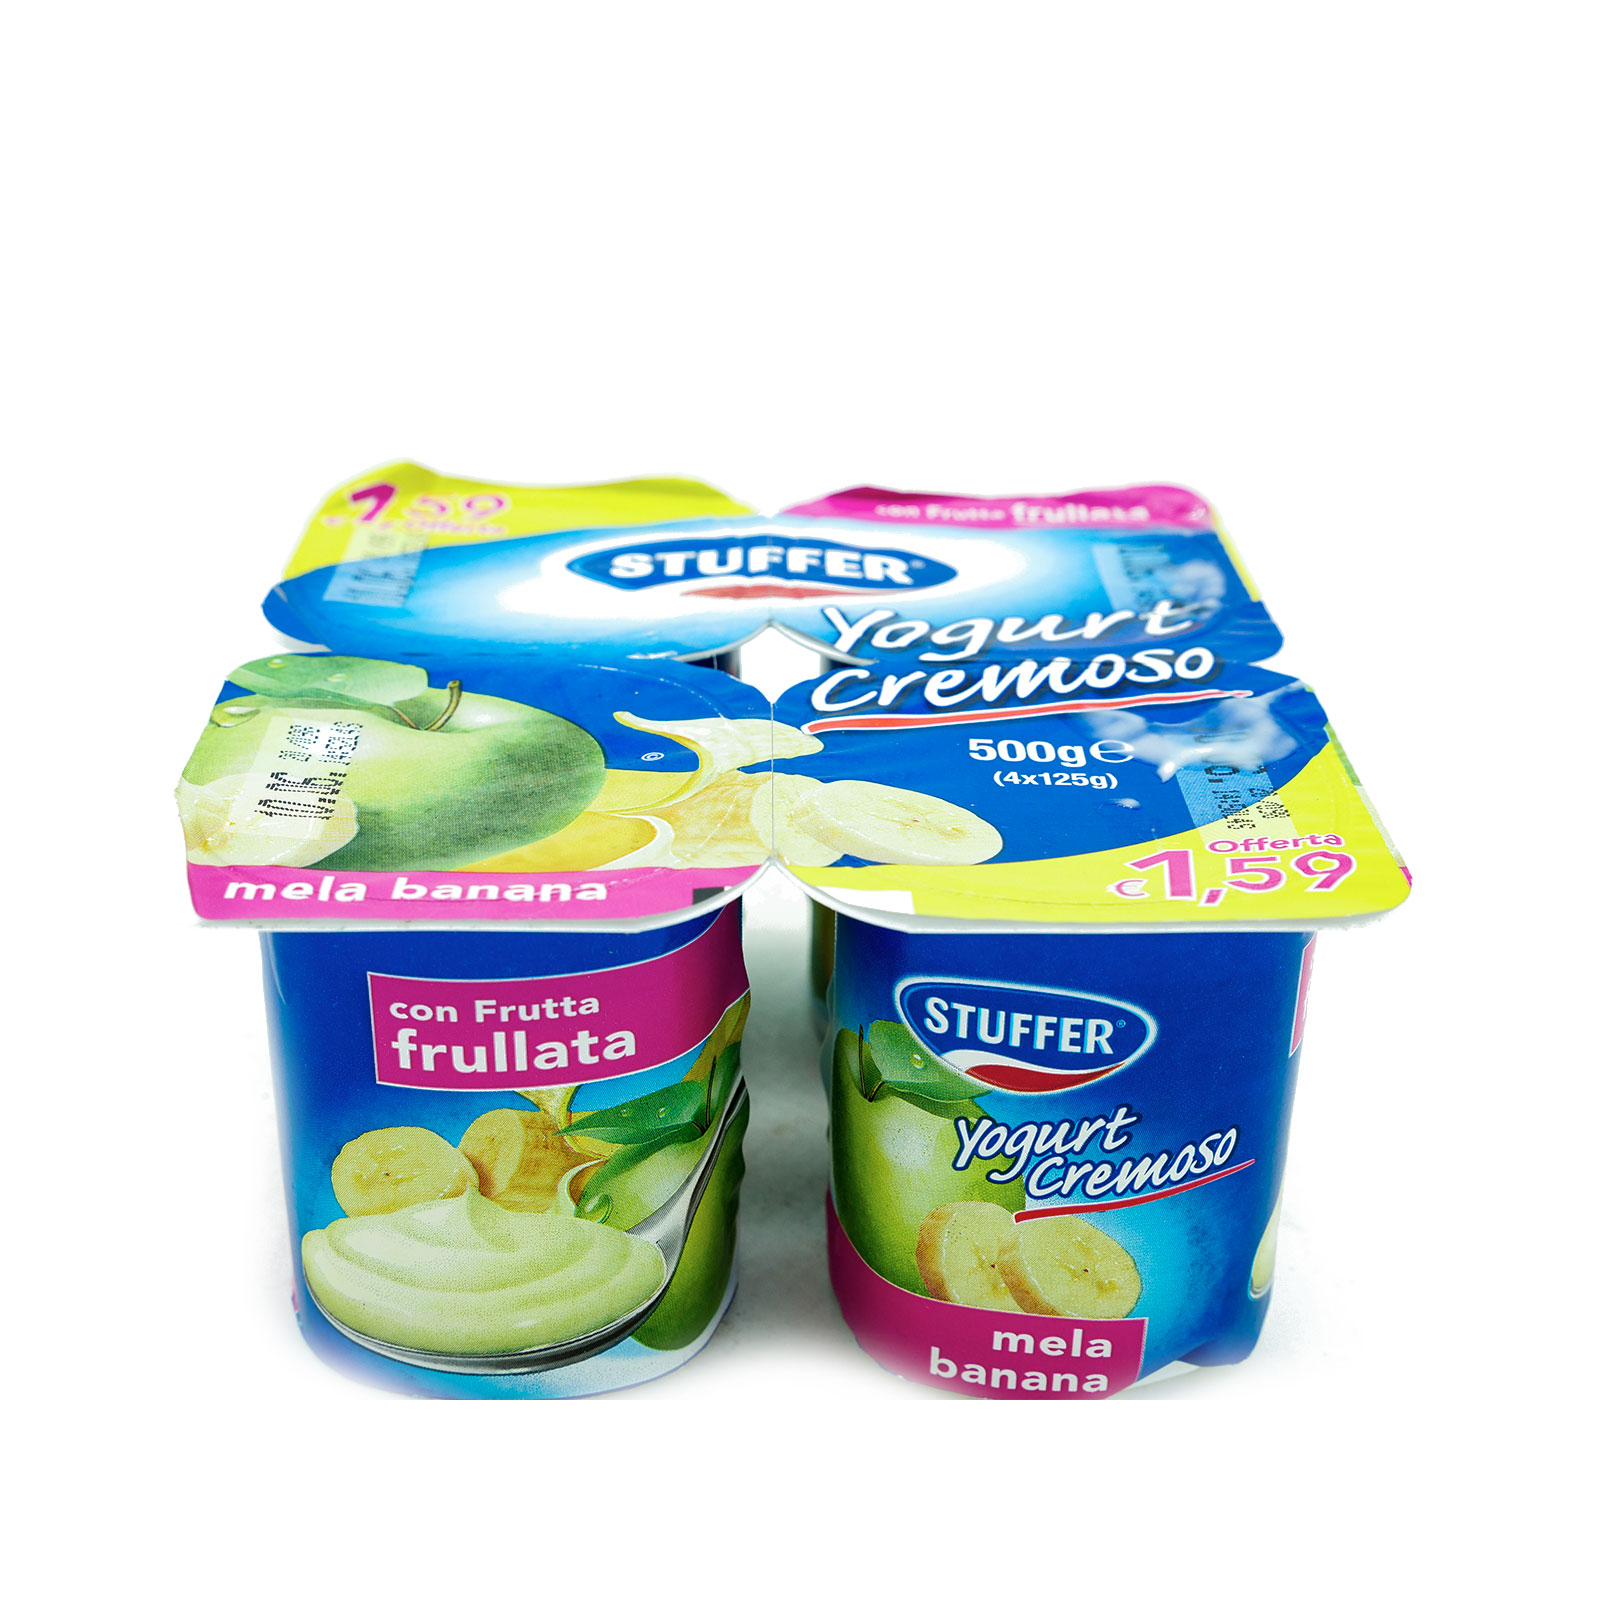 Sfizi e Delizie - Stuffer Yogurt Cremoso Mela e Banana